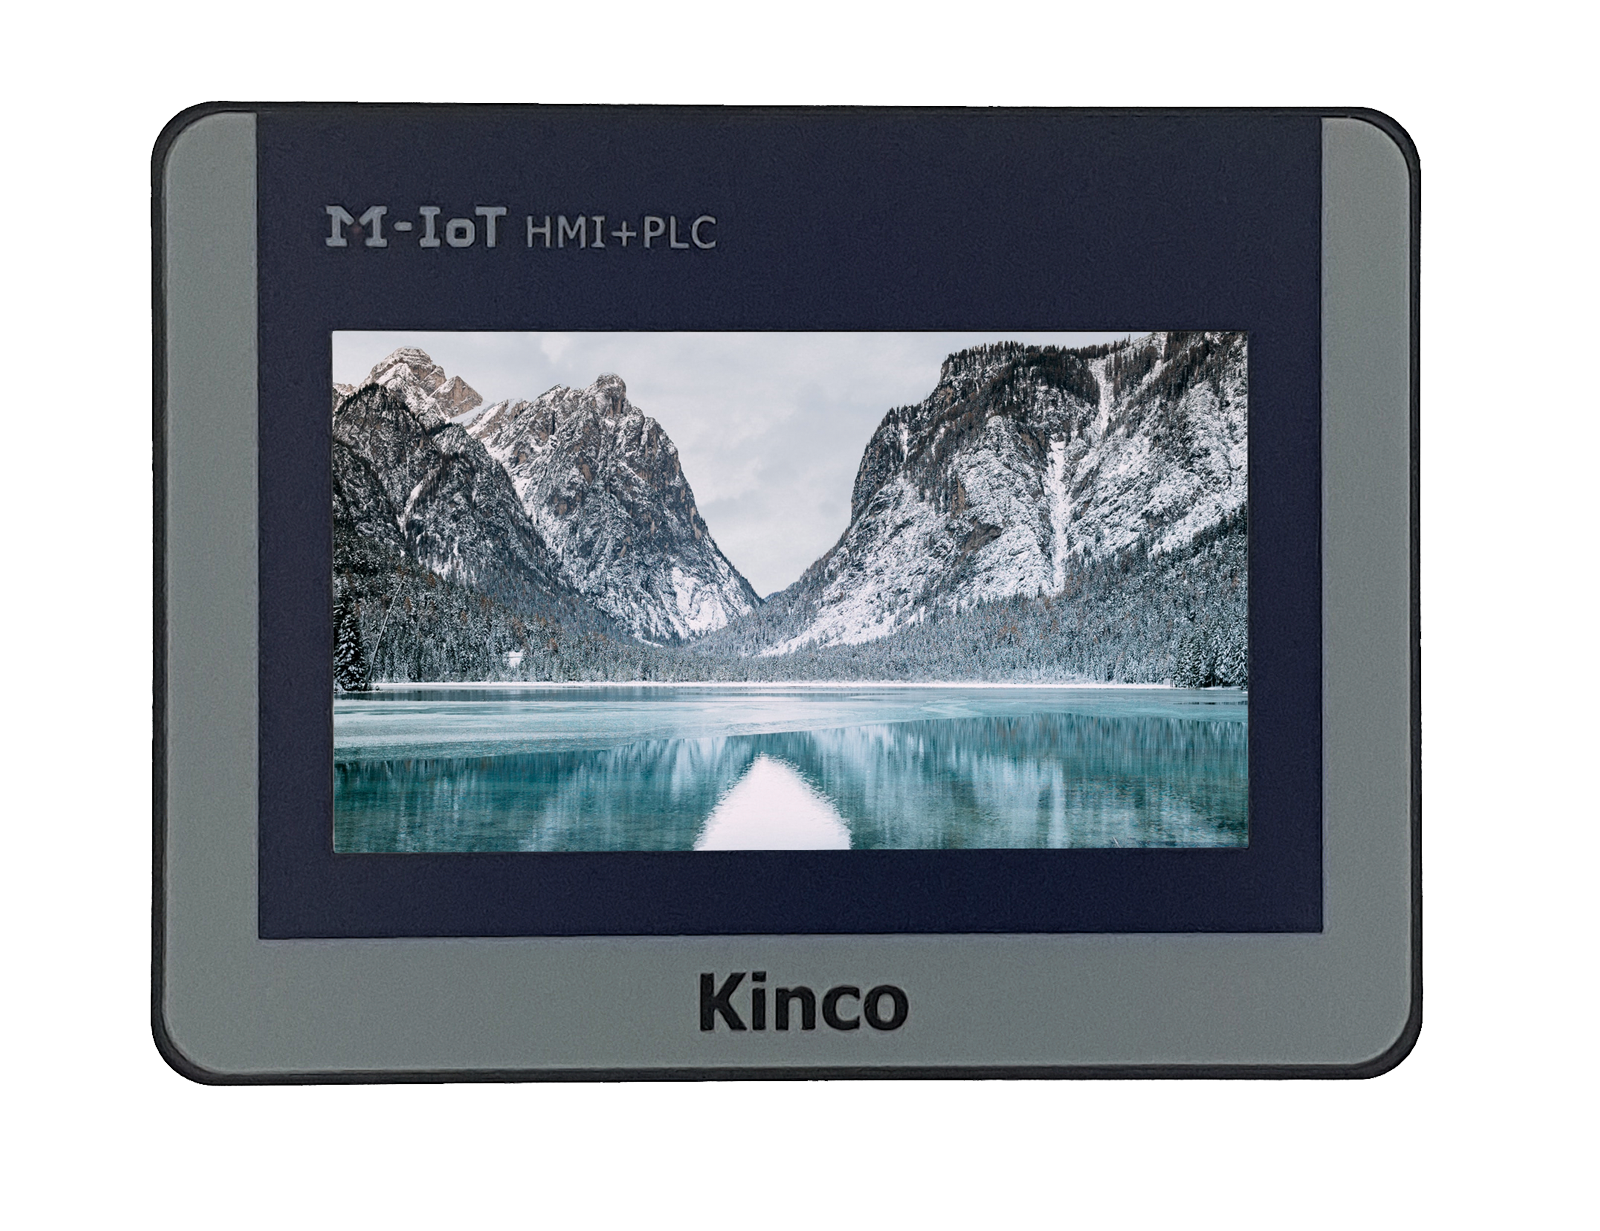 Kinco MK043E-27DT 4" IoT Series HMI-Touchpanel mit Ethernet und integrierter SPS